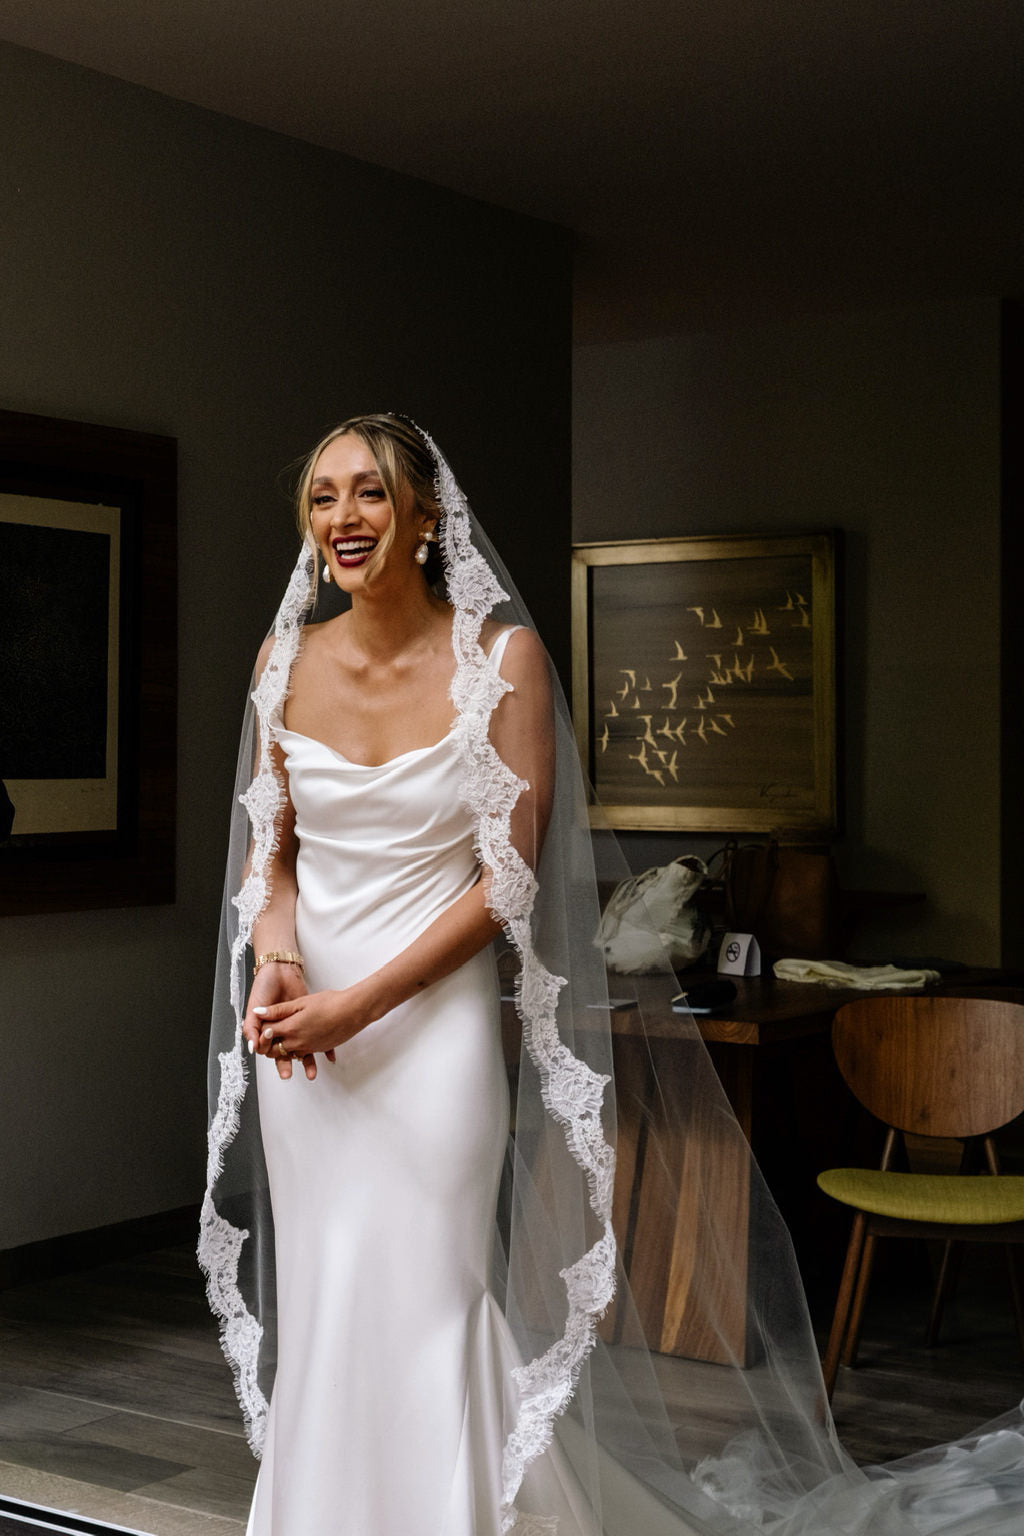 Luxury Wedding Veils / Ivory Lace Veil /lace Applique Cathedral Veils, Long  Bridal Veil, White Vail &vomb 